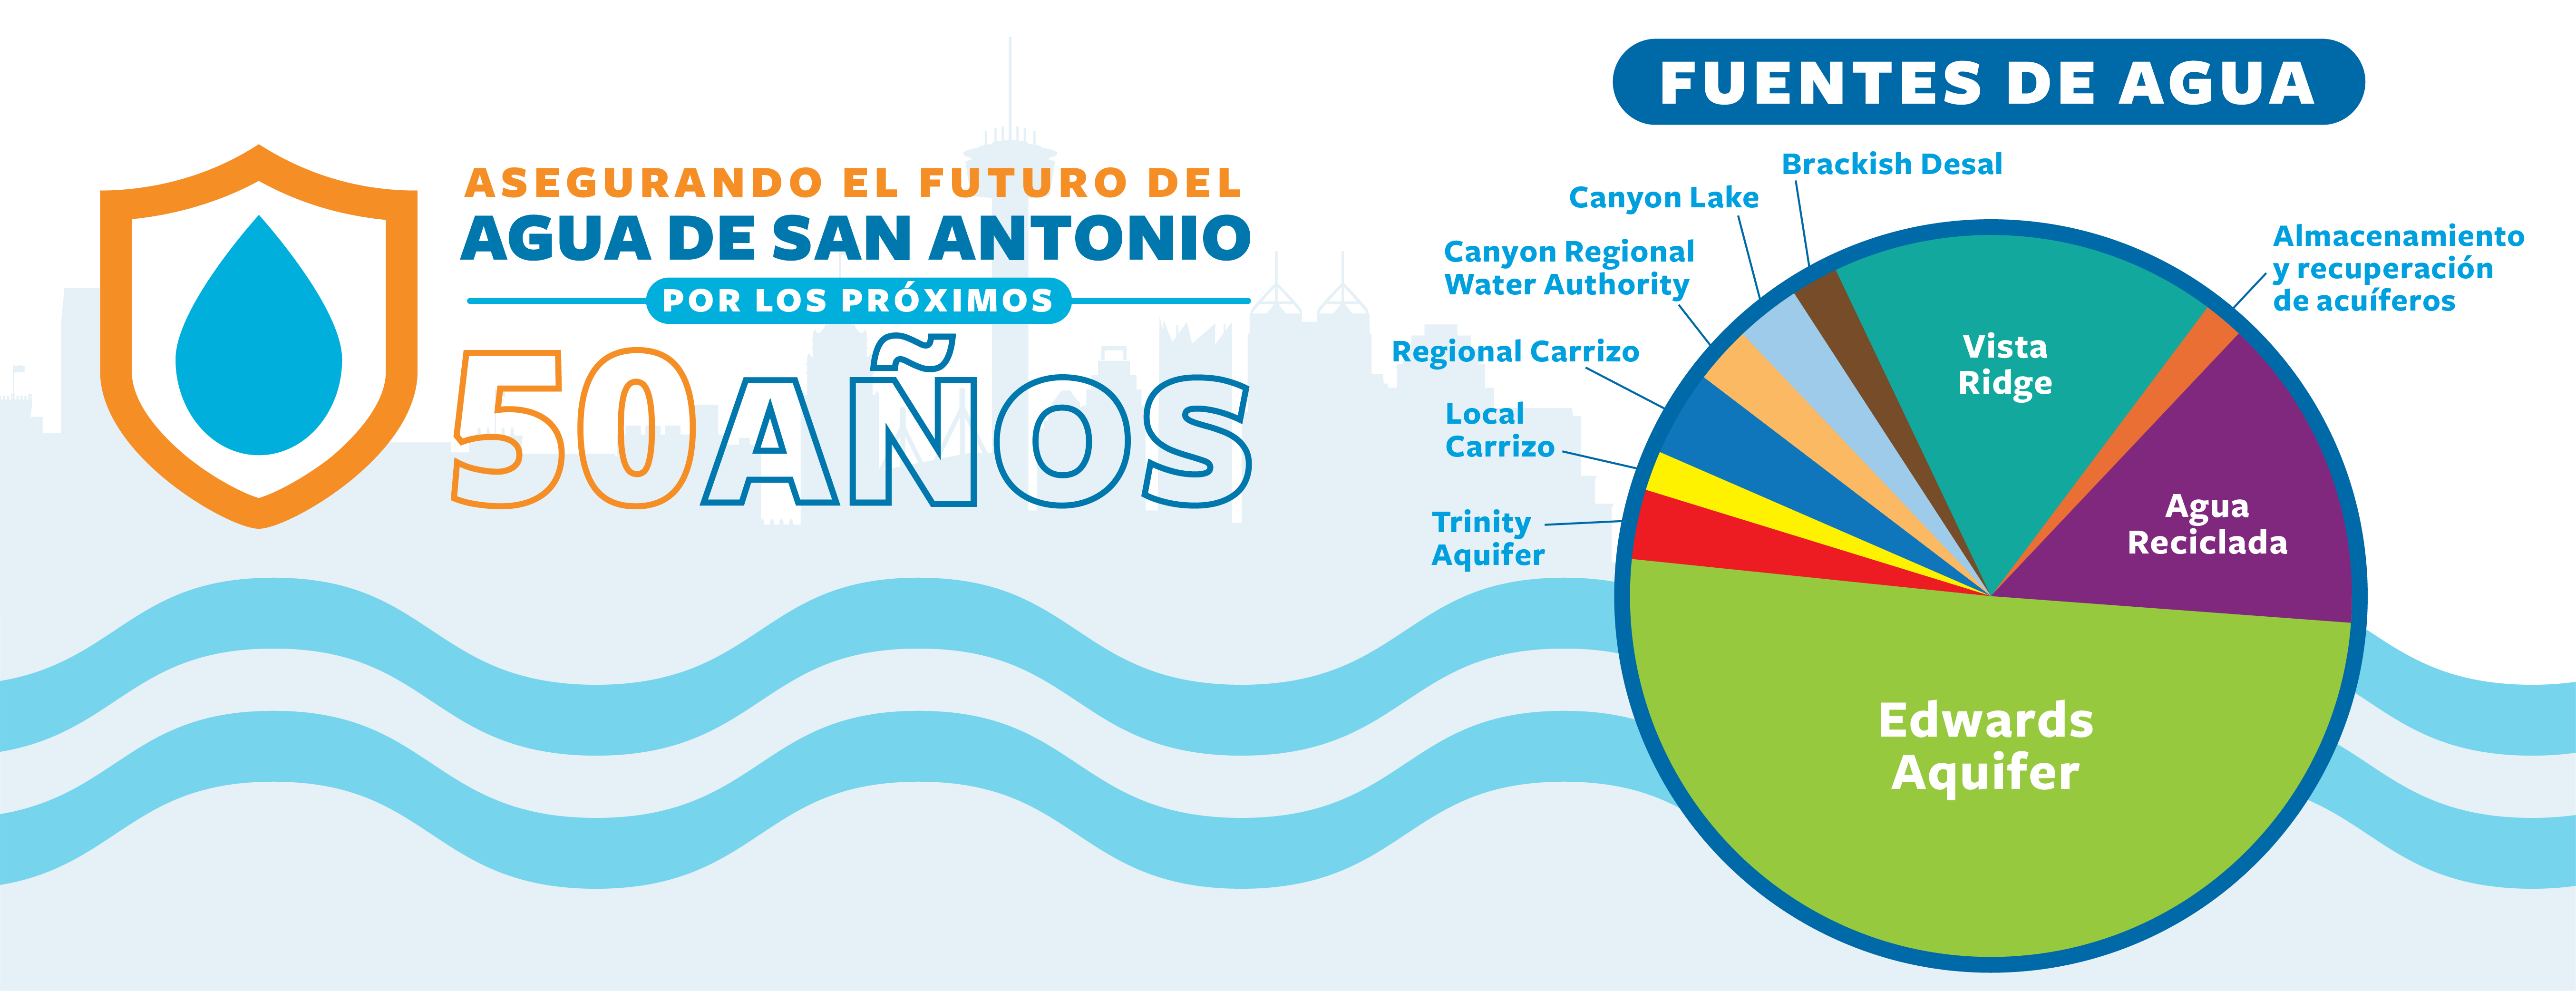 Asetgurando el Futuro Del Agua De San Antonio